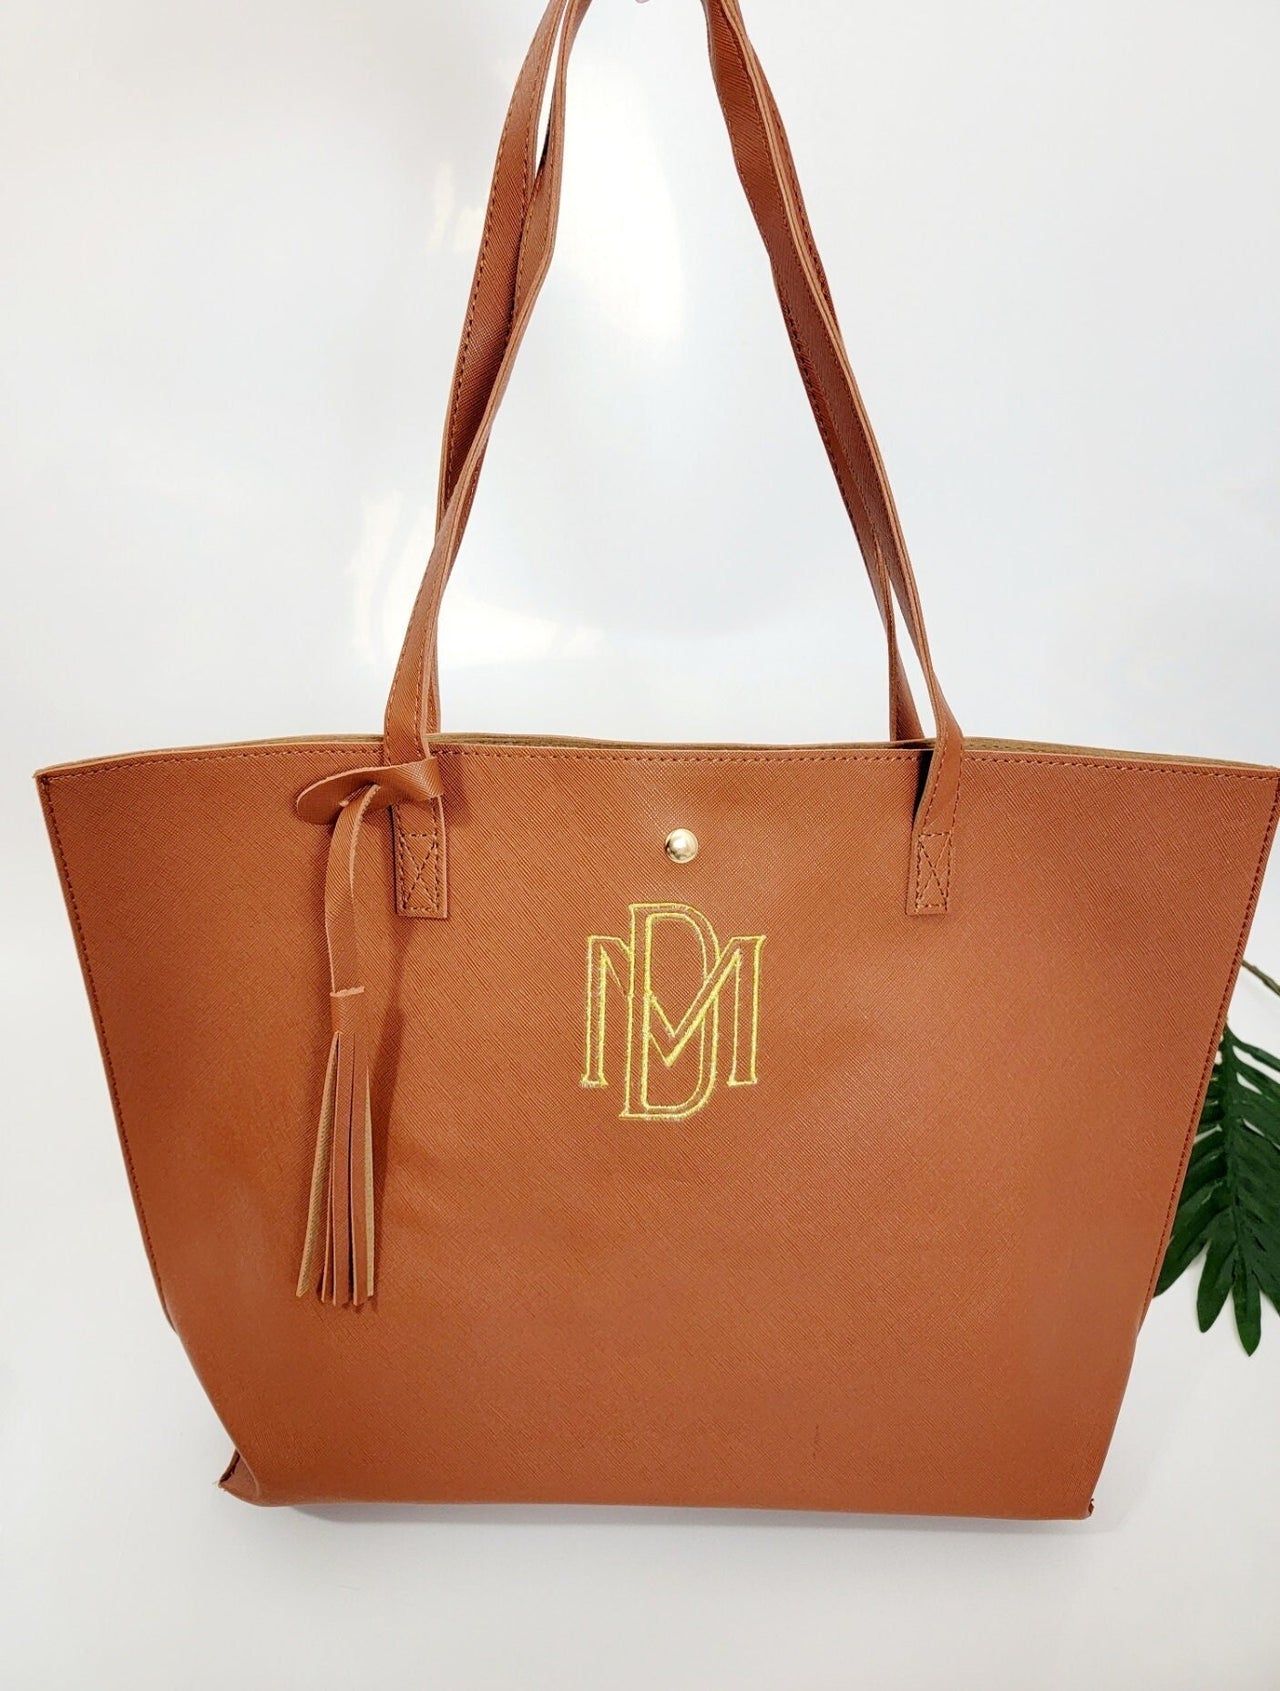 Brown Monogrammed Tote Bag For Women - Personalized Work Tote Bag - Travel Tote Bag - Bridesmaid Gift - Tote Bag Aesthetic